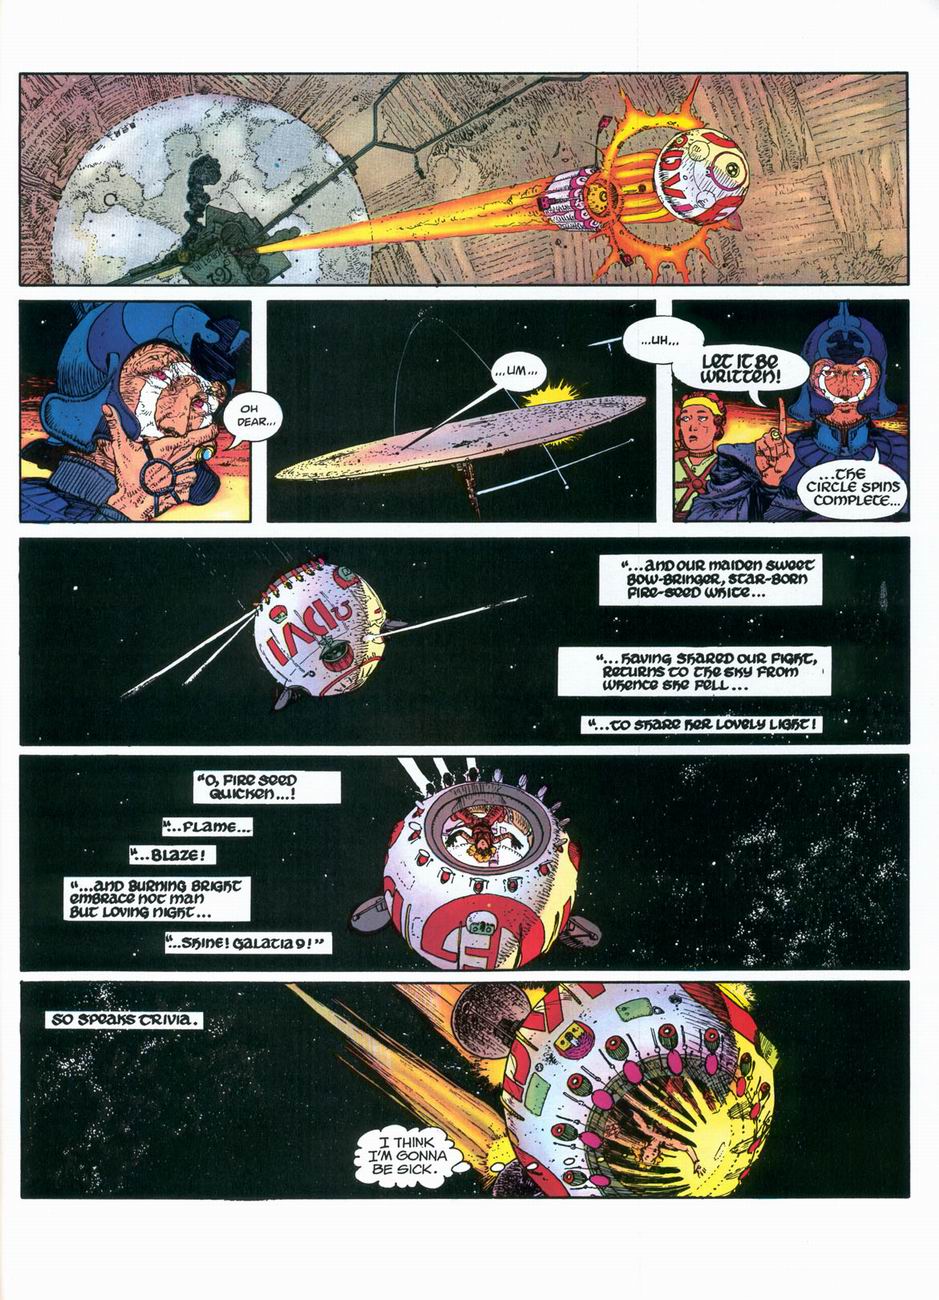 Marvel Graphic Novel issue 13 - Starstruck - Page 36